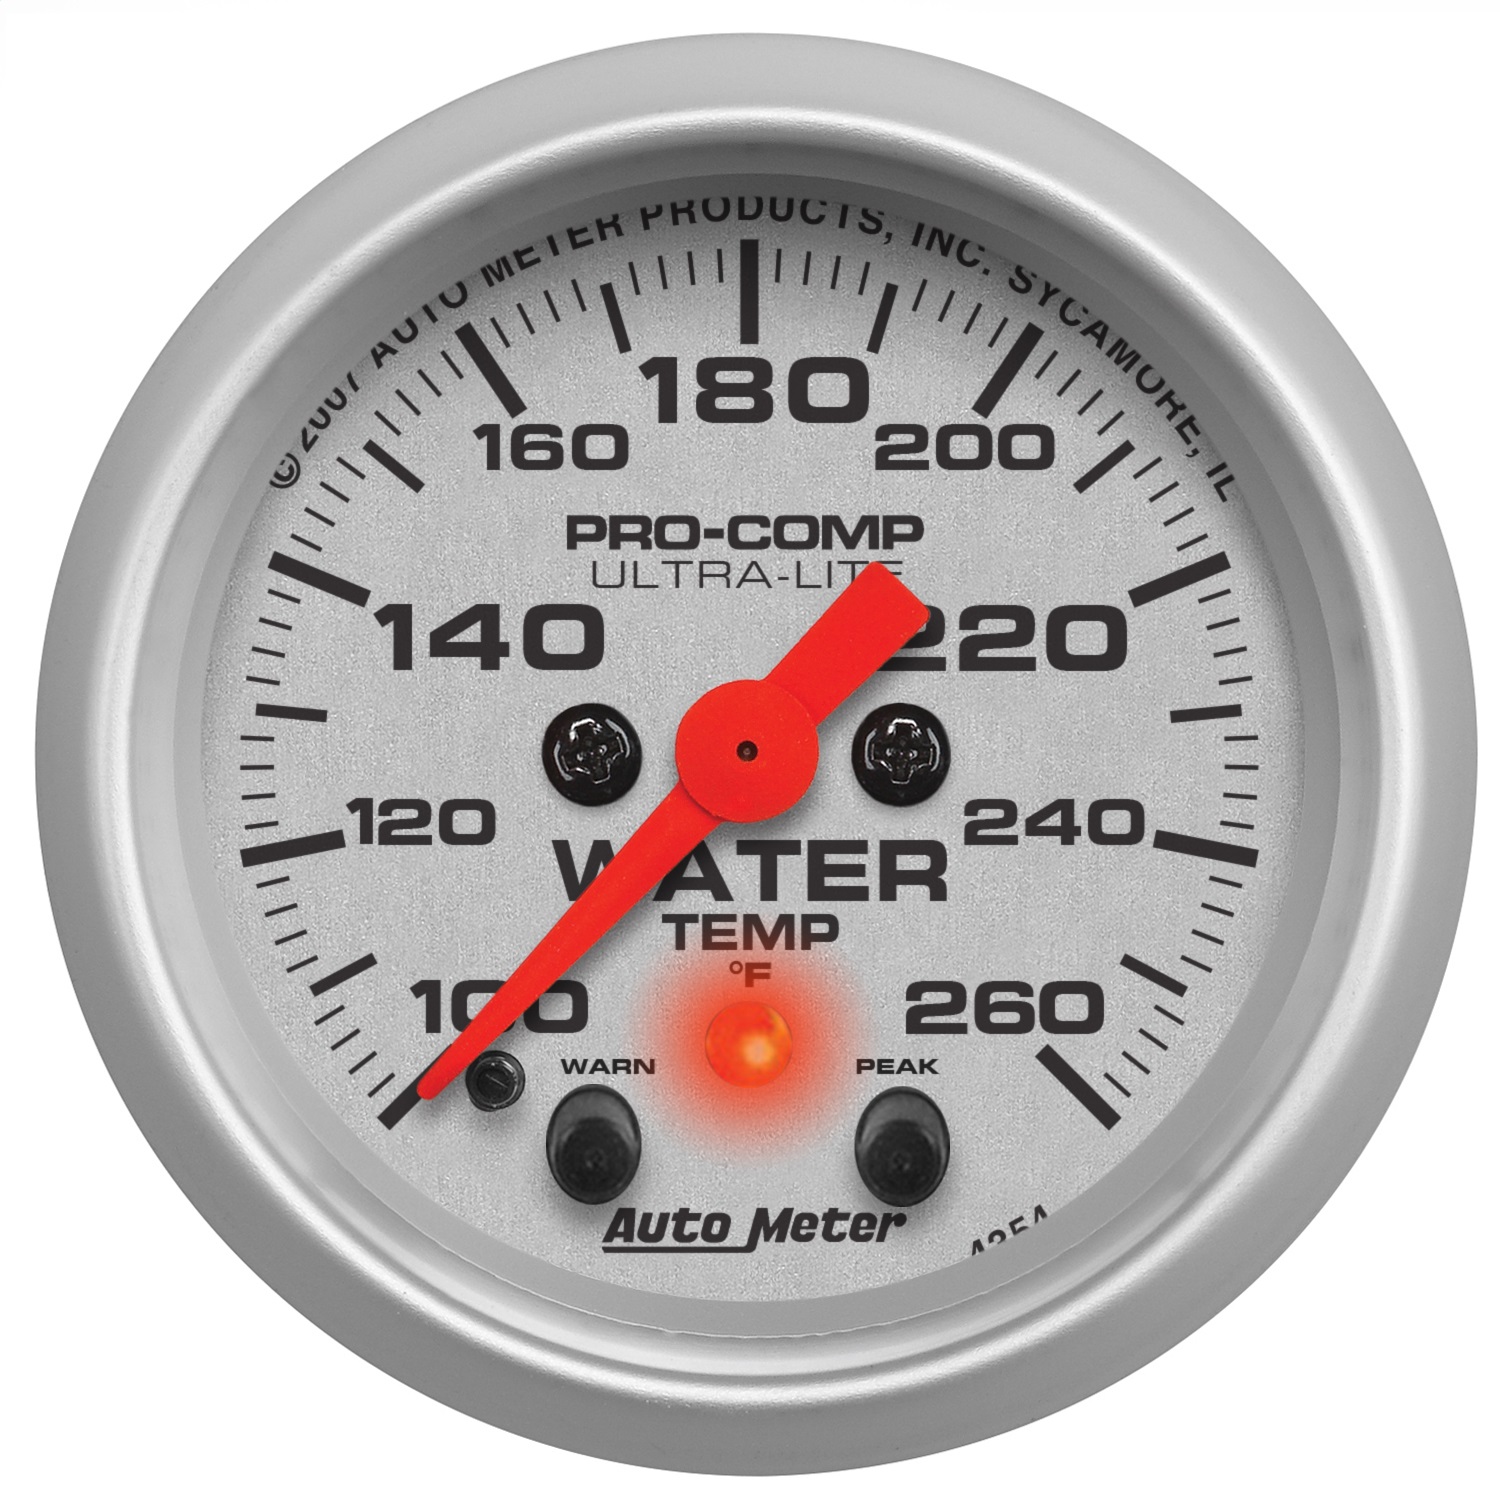 Auto Meter Auto Meter 4354 Ultra-Lite; Electric Water Temperature Gauge